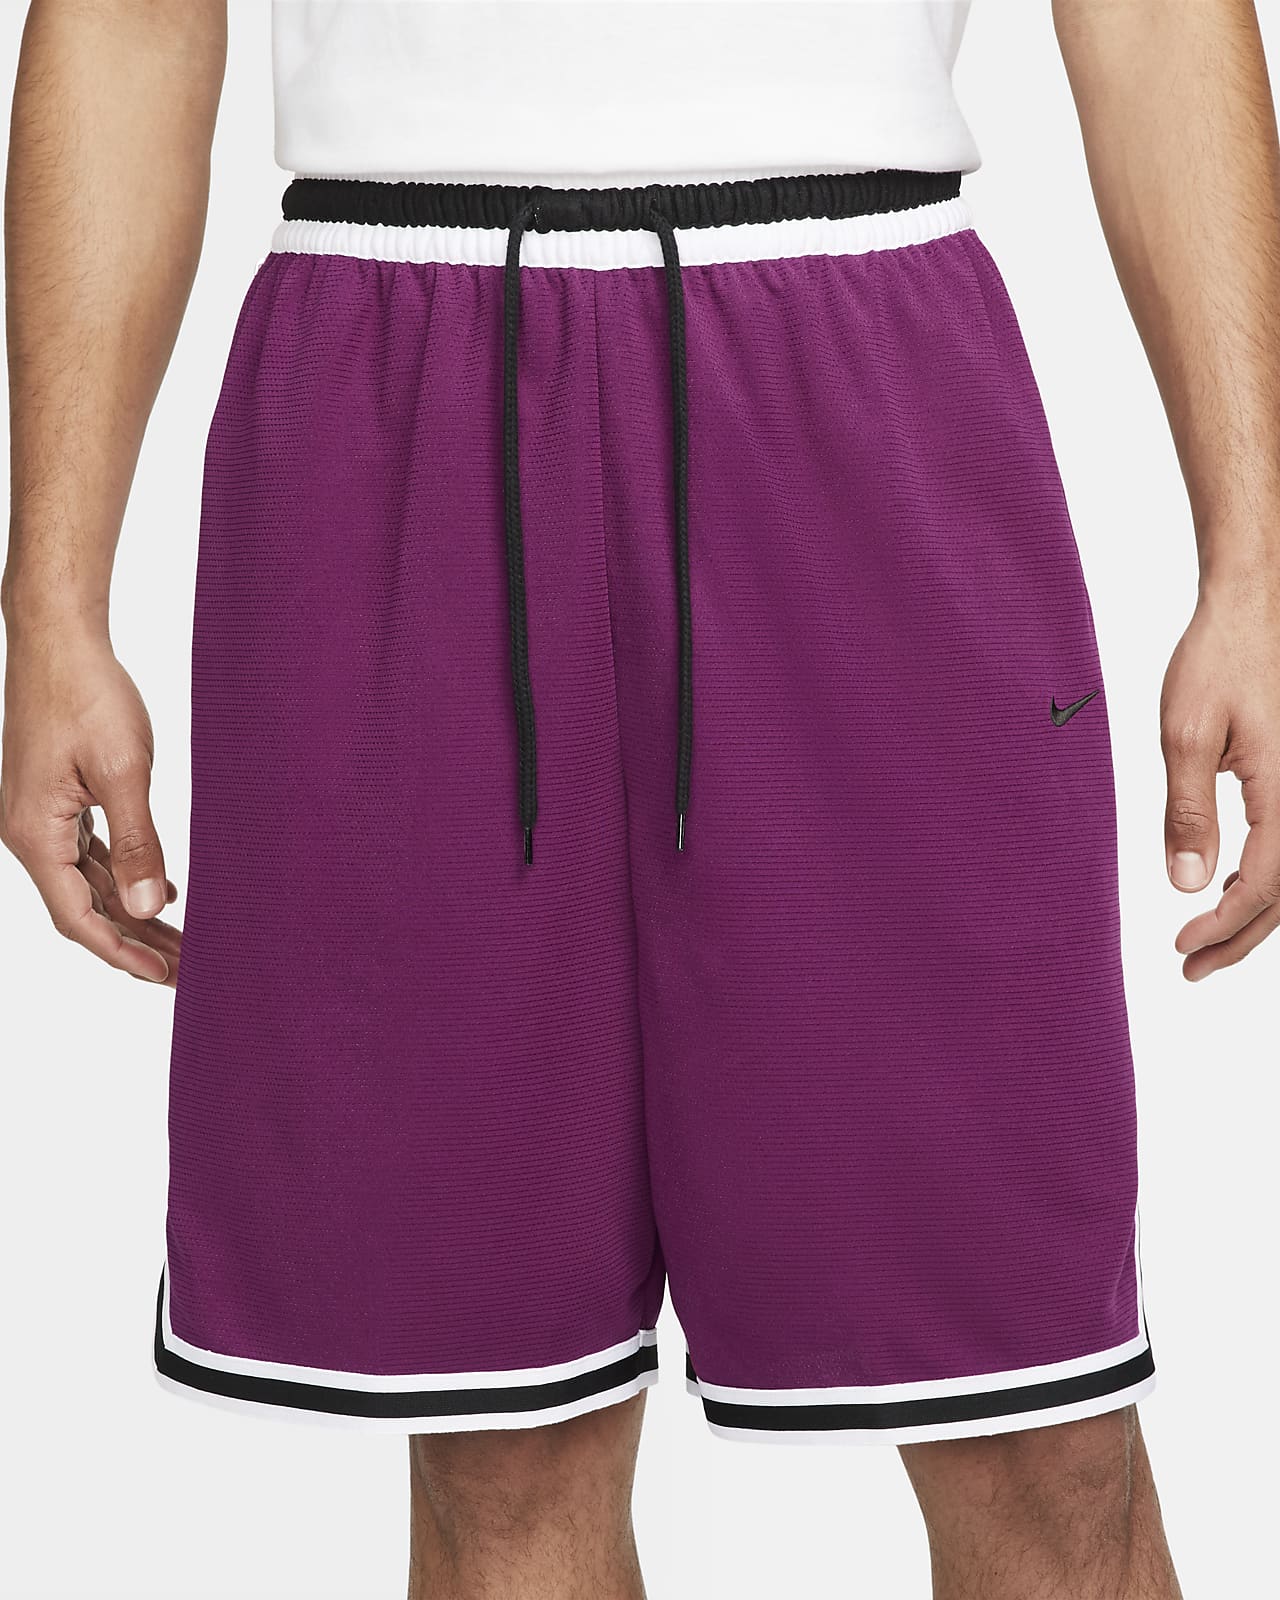 Nike Dri-FIT DNA Men's Basketball Jersey